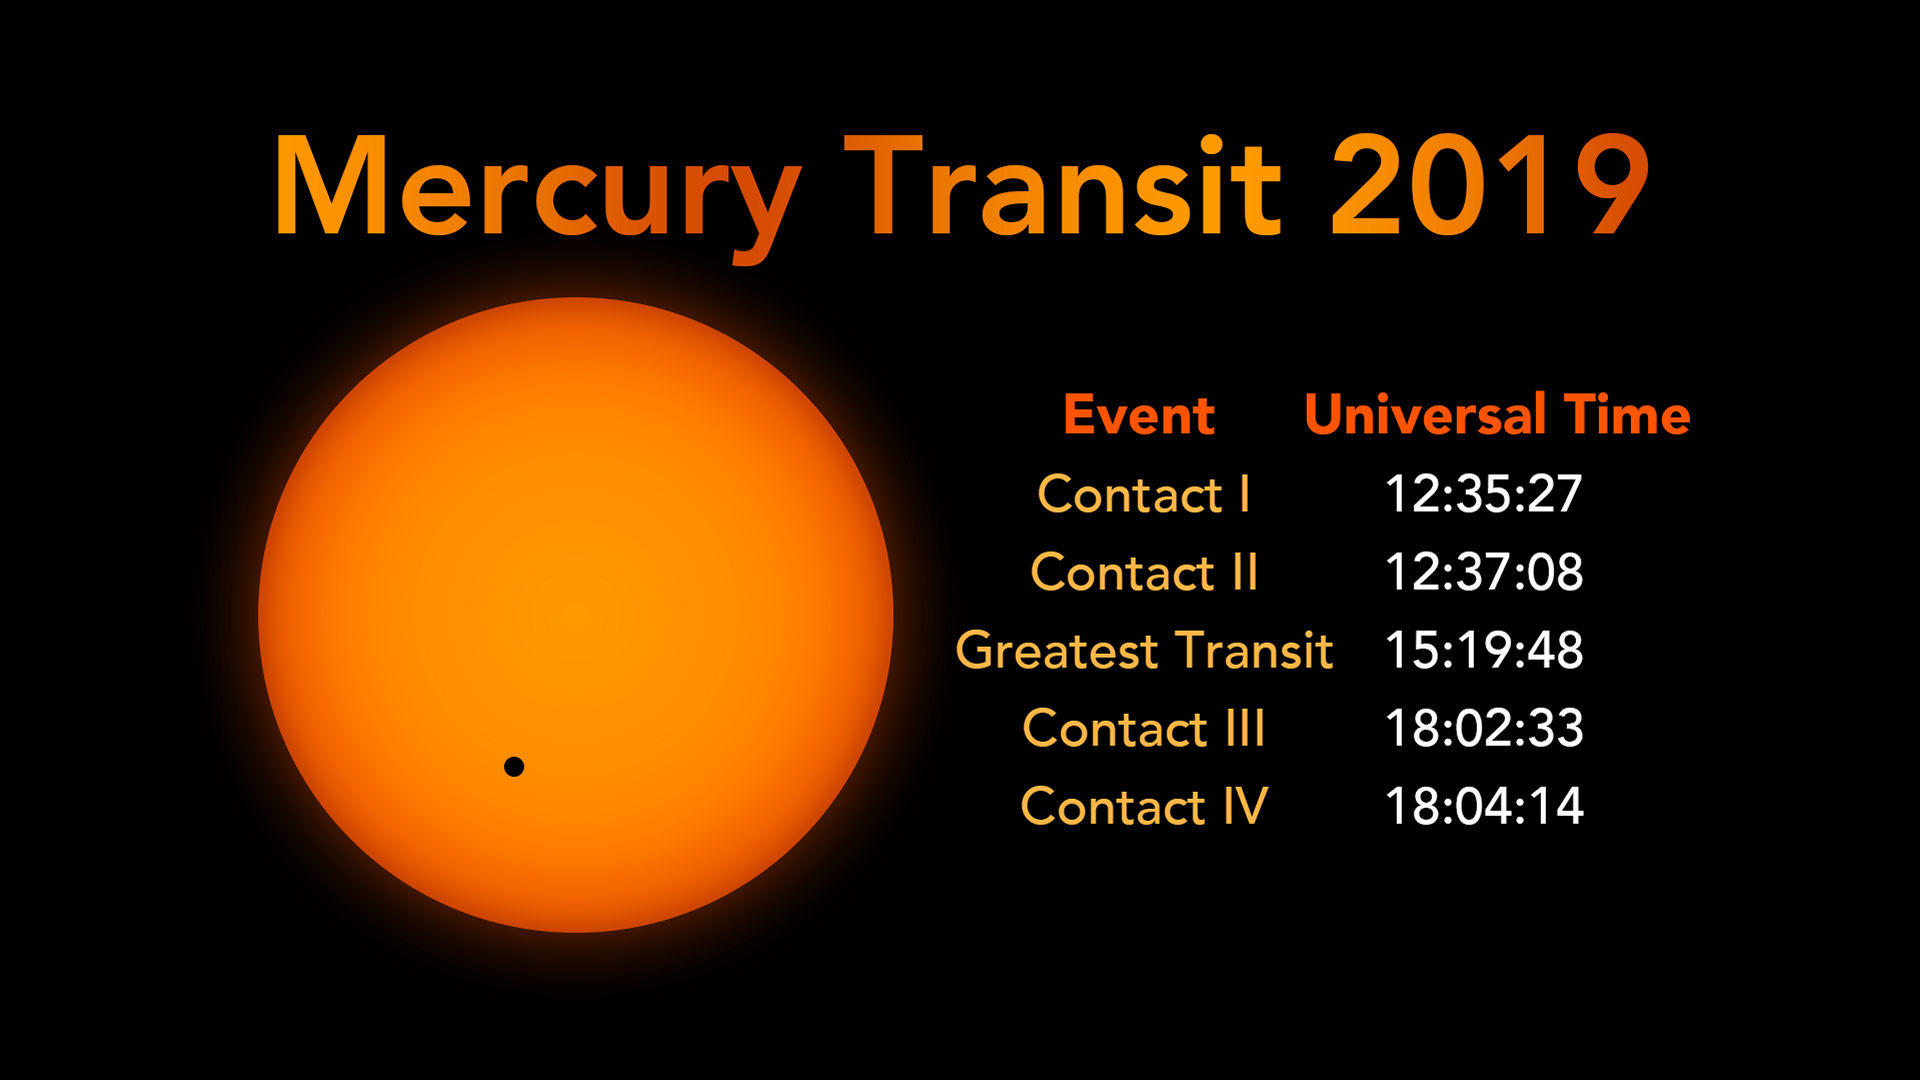 Transit of Mercury 2019